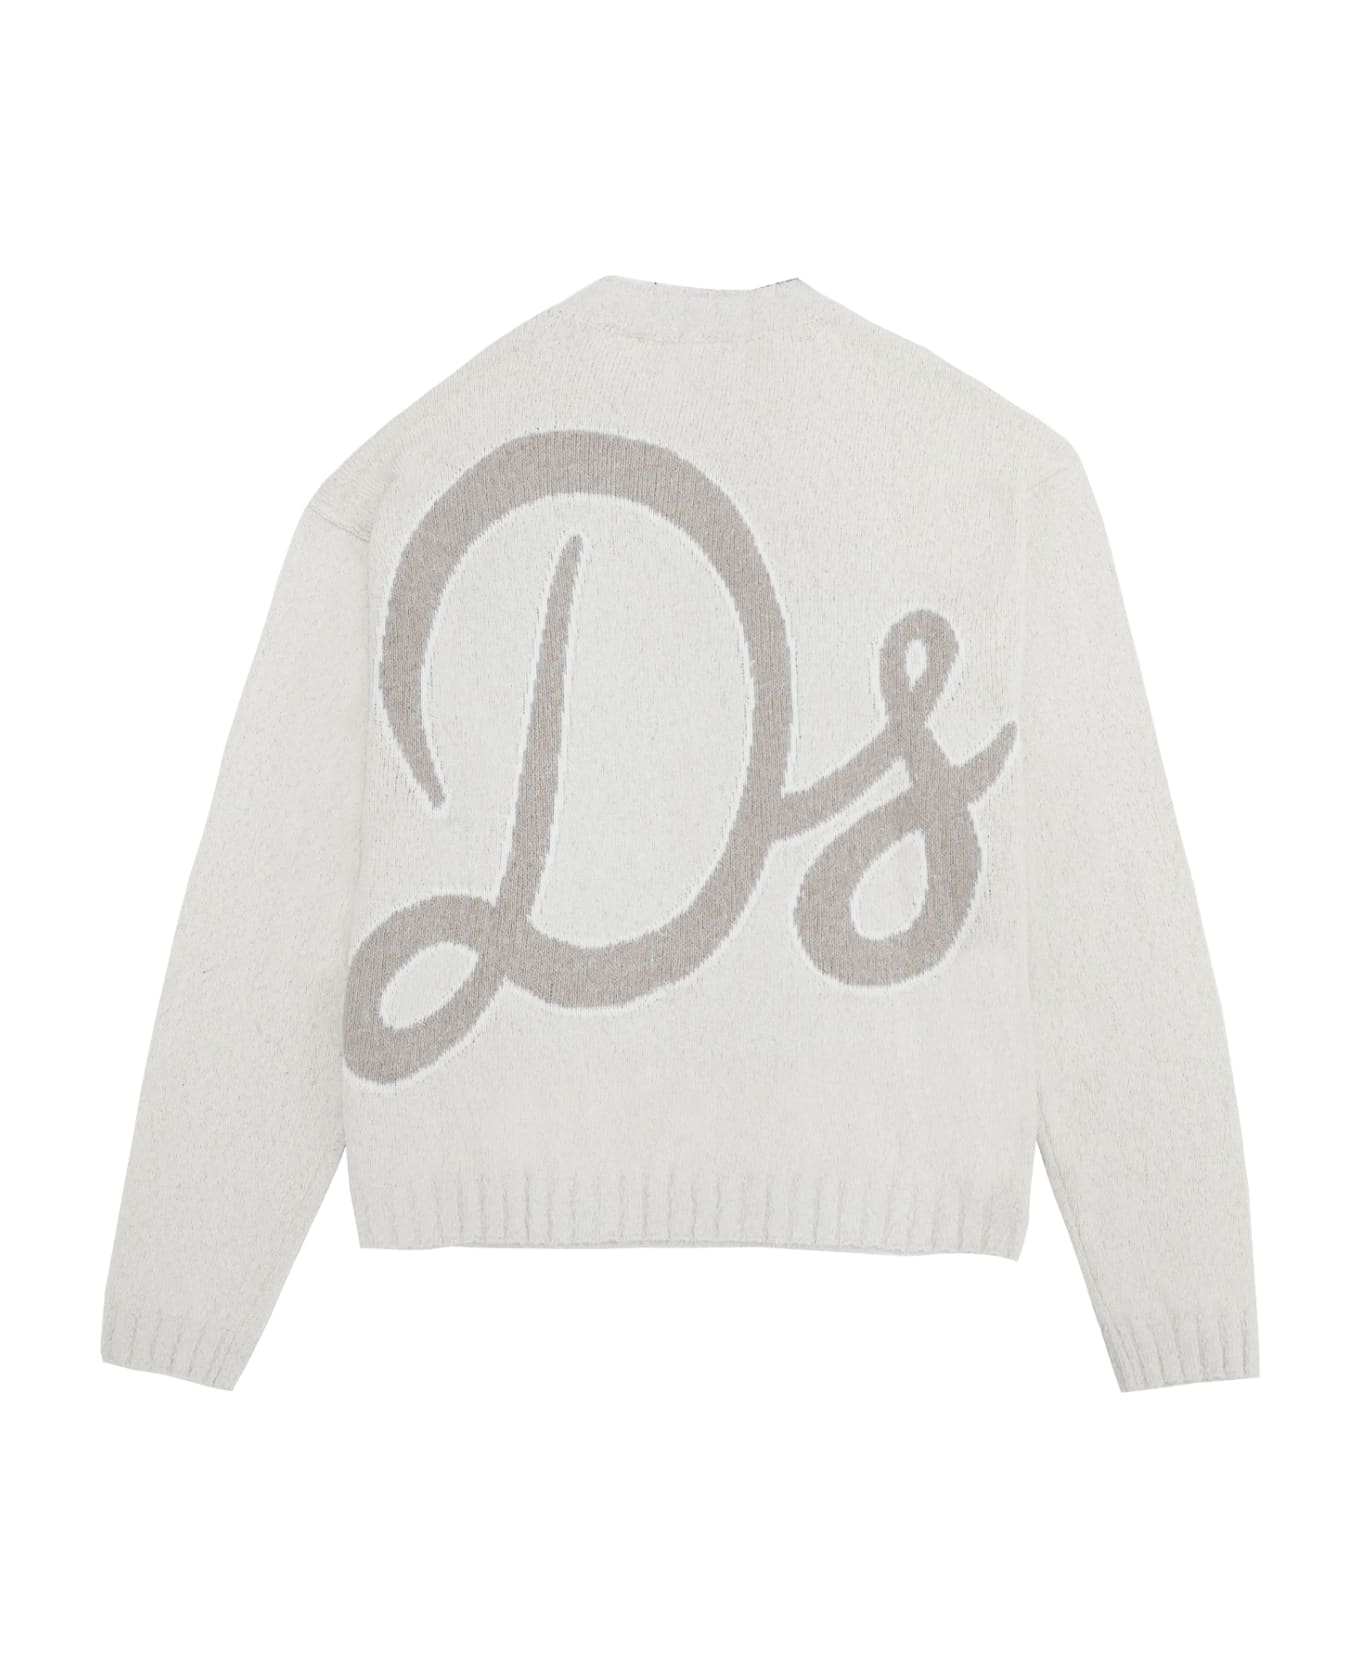 GCDS Sweater - White